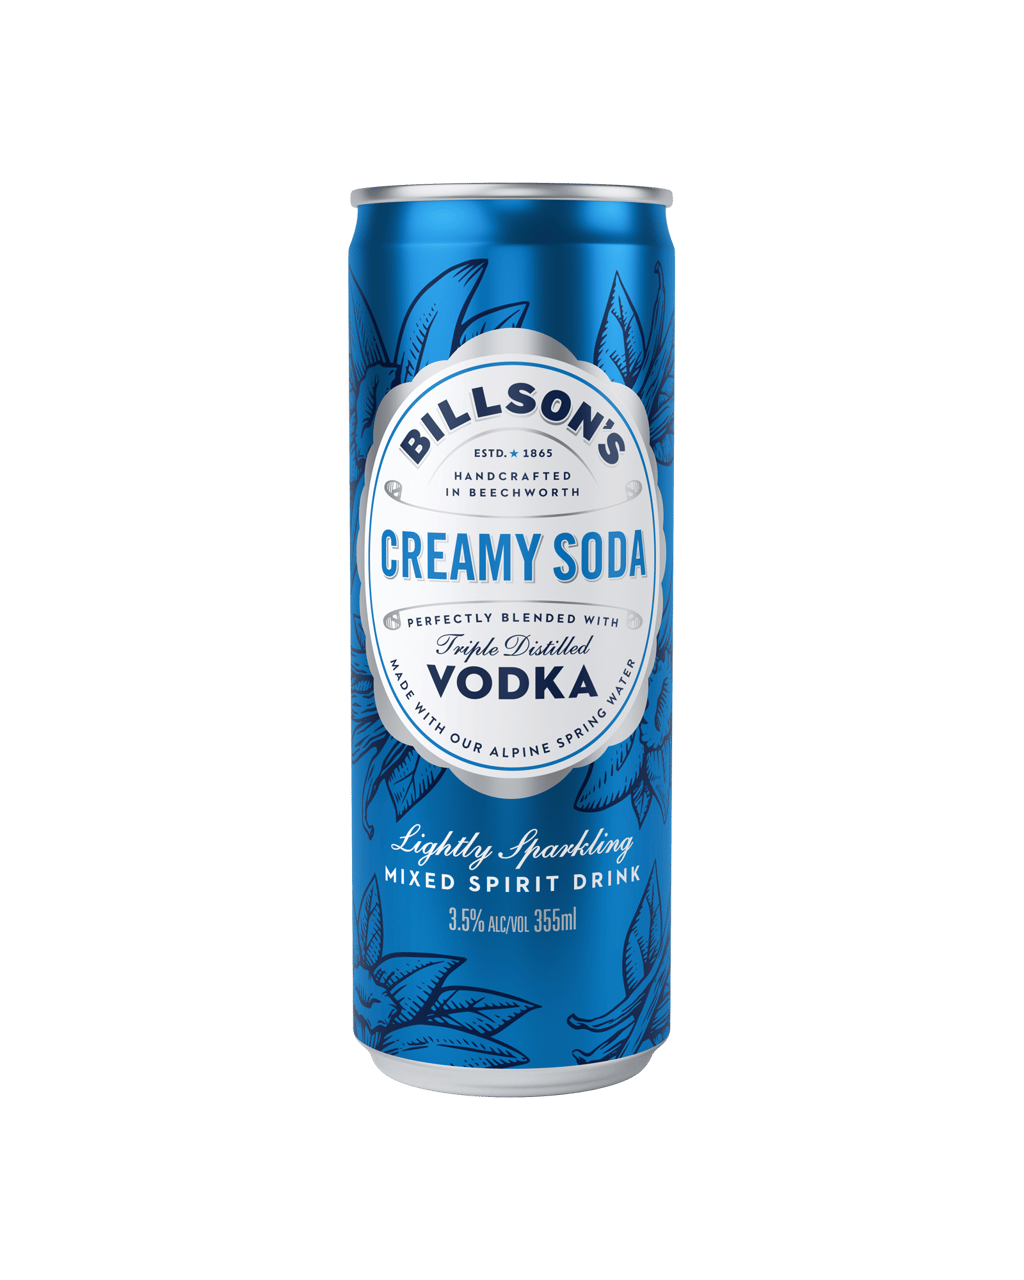 Image - Vodka with Creamy Soda by Billson's